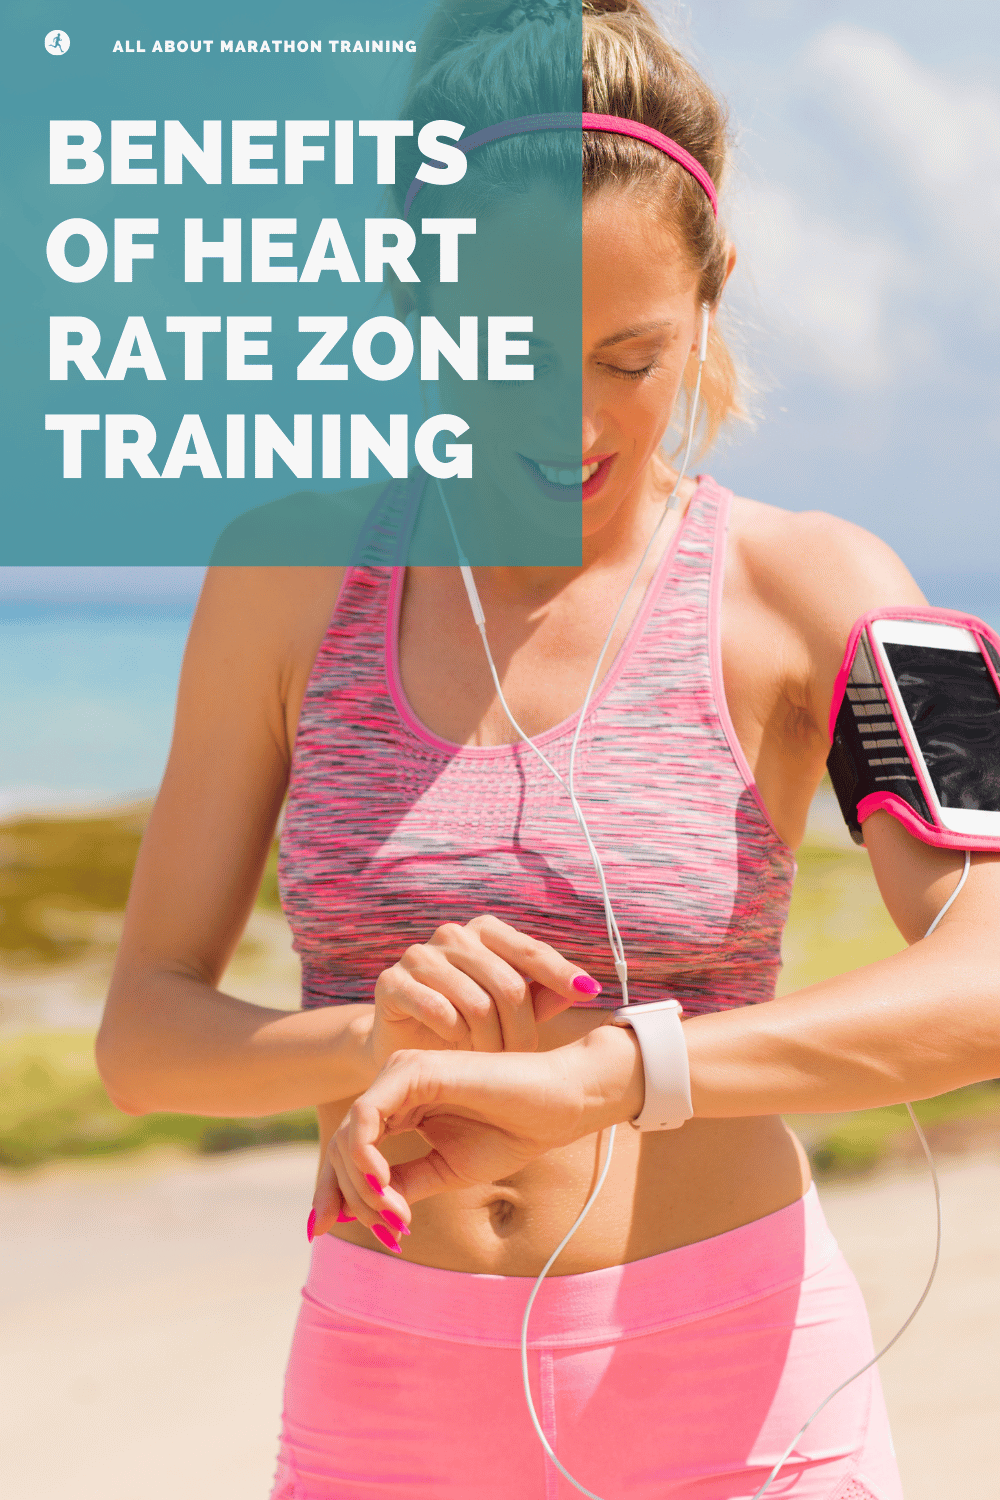 Marathon Training Heart Rate Zones Benefits of Trainining